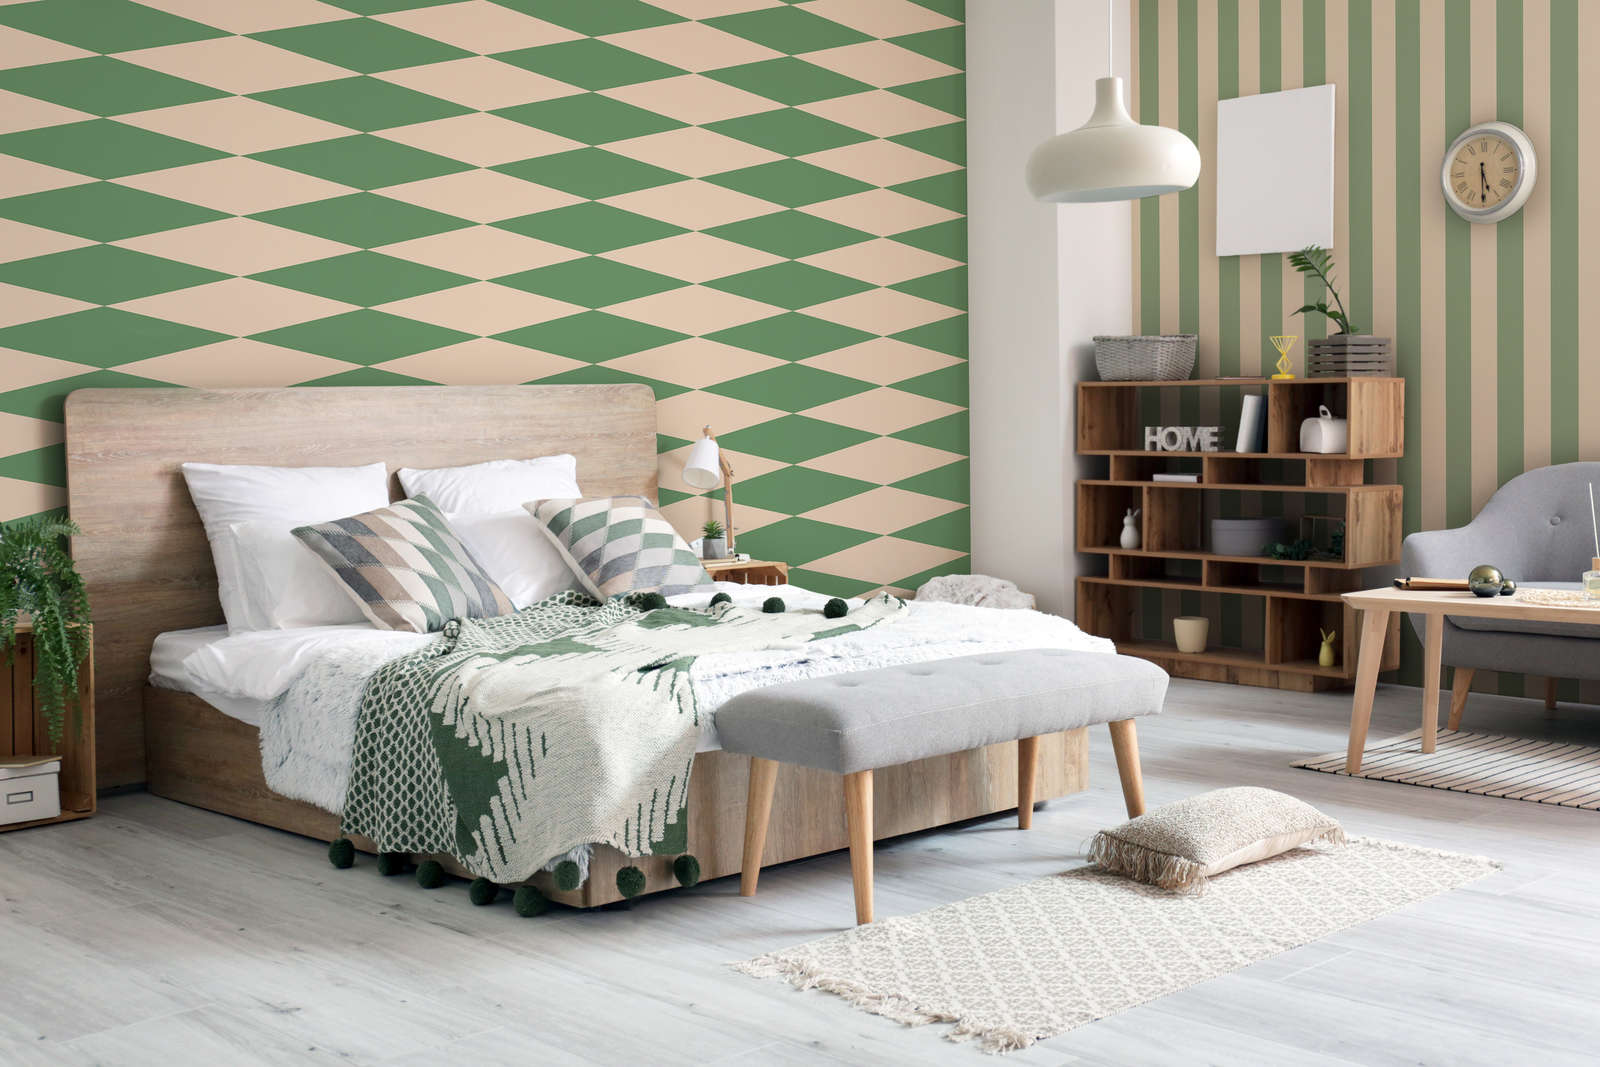             70s Look Diamond Pattern Wallpaper - Green, Beige | Premium Smooth Vliesbehang
        